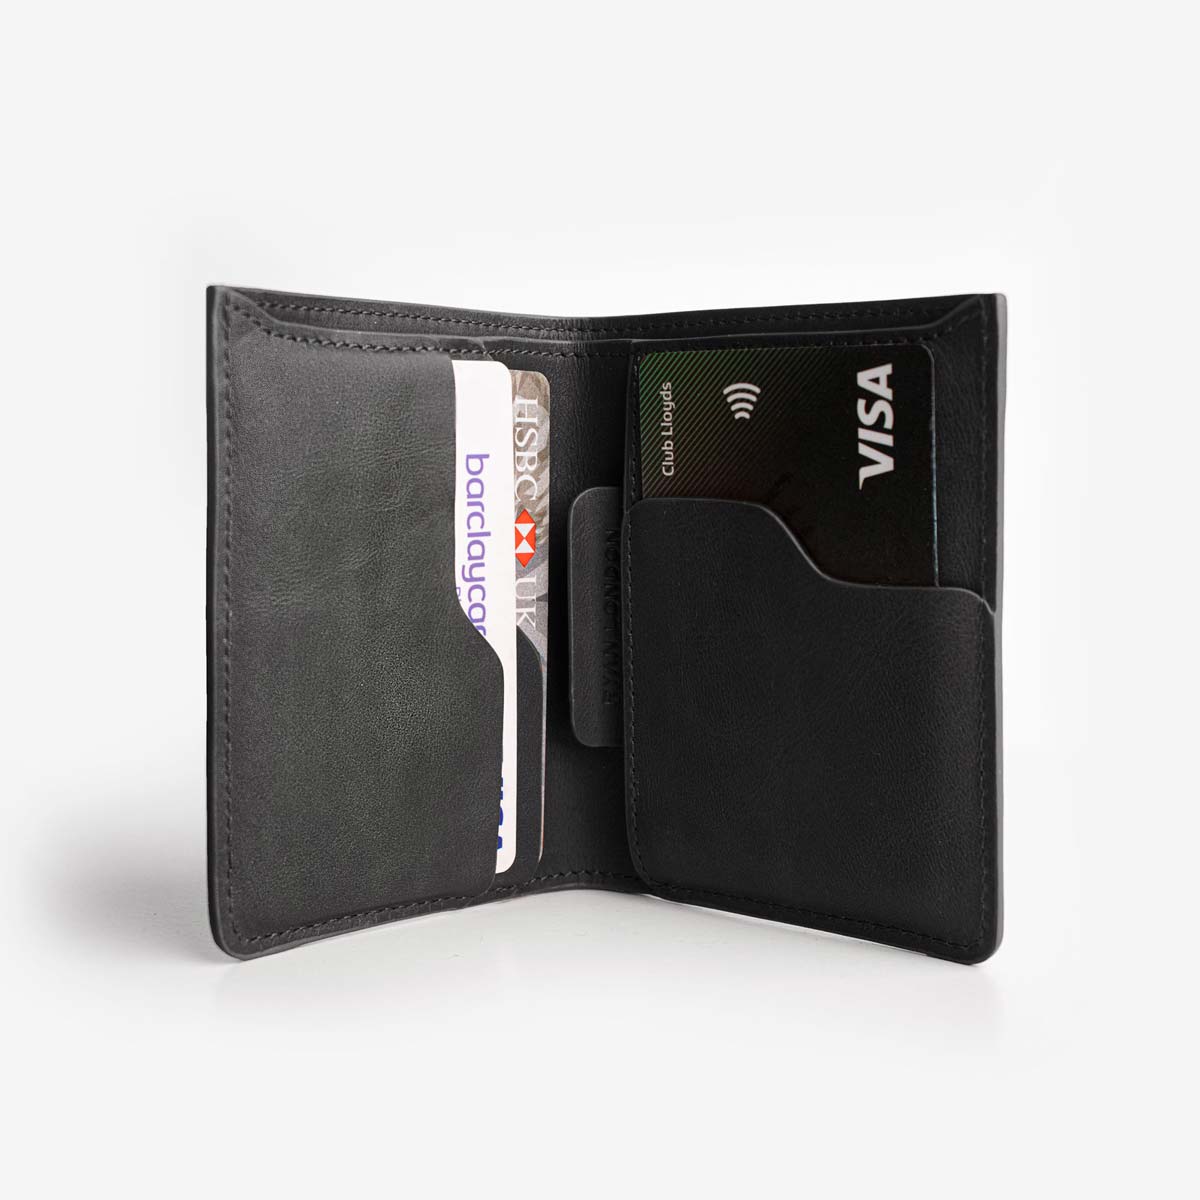 Super Slim Bi-fold wallet - Black - RYAN London